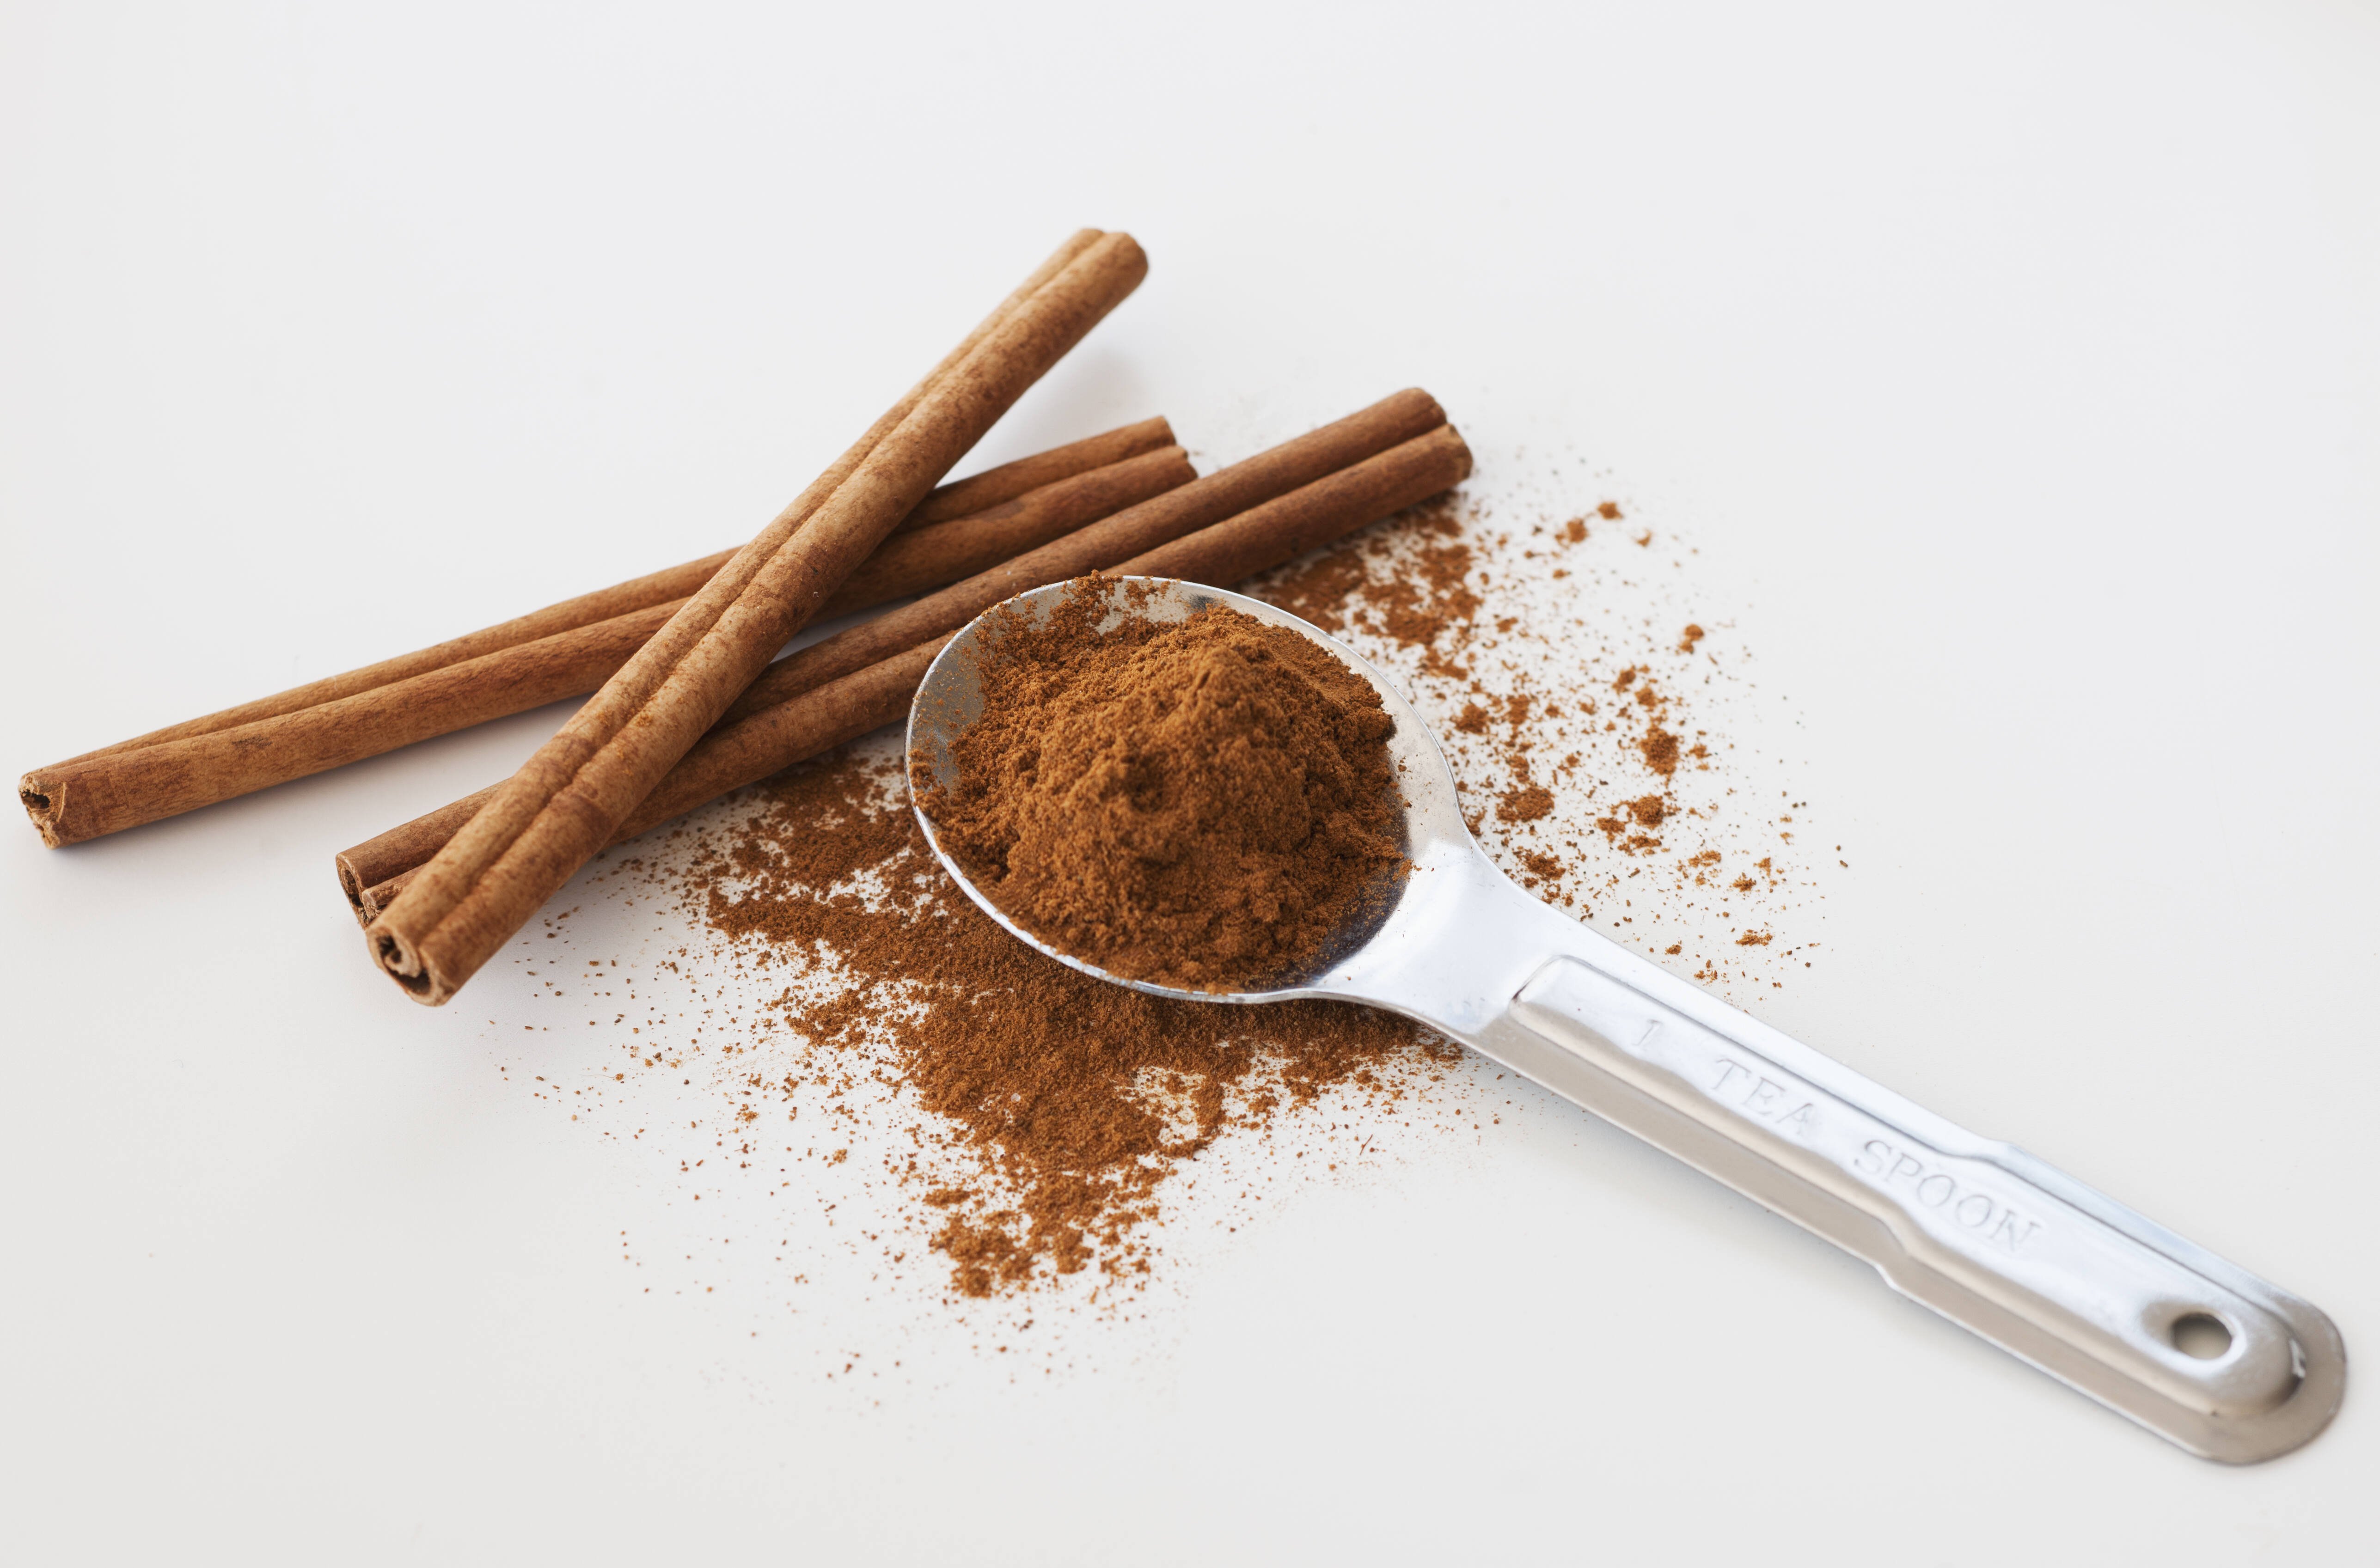 Cinnamon sticks and a teaspoon of cinnamon powder | Source: Getty Images